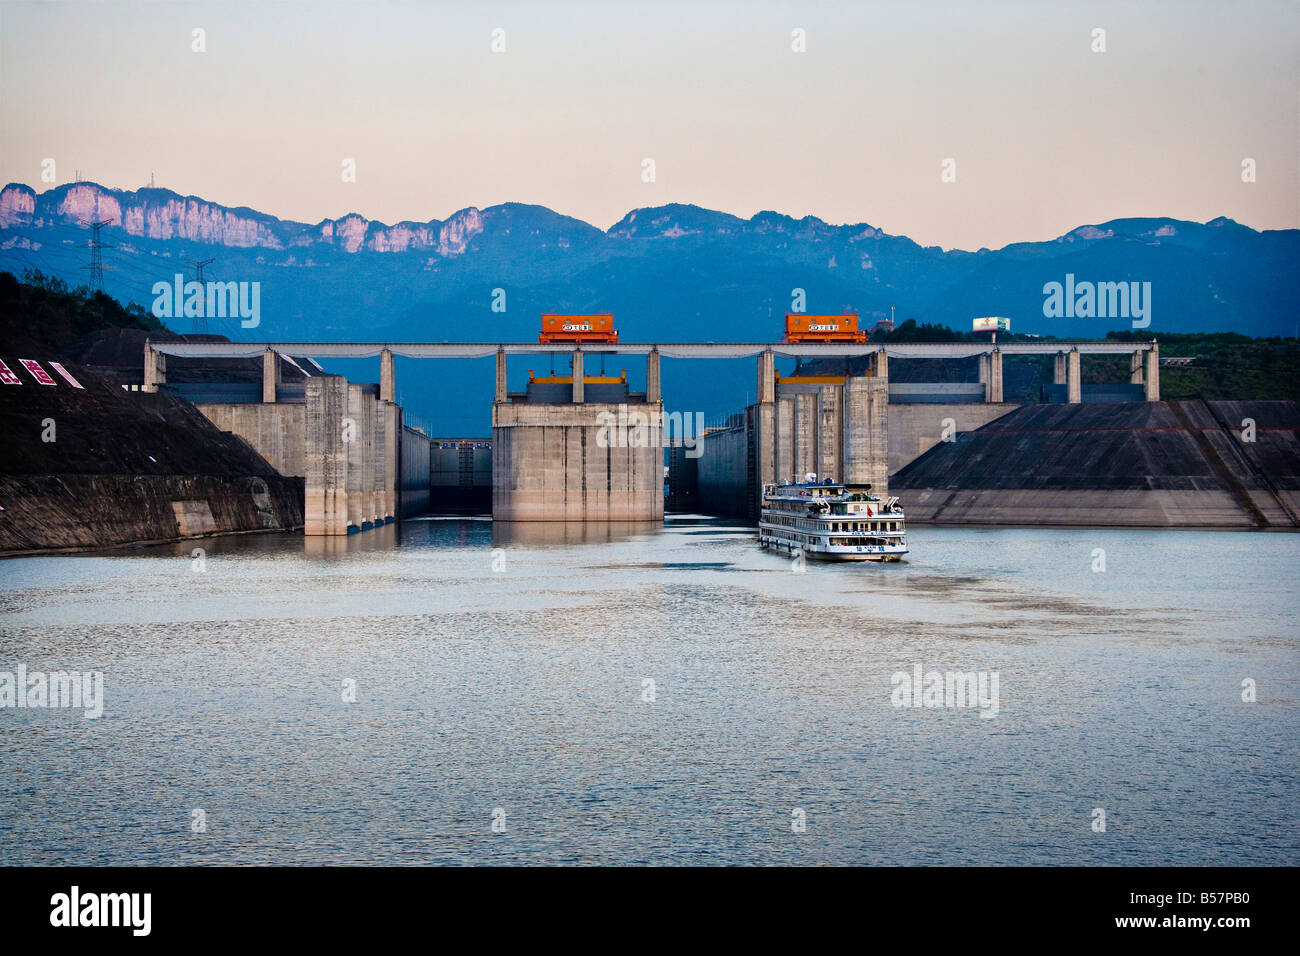 Eingang zum Schiff sperrt drei Schluchten Damm Yangzi Fluss China JMH3432 Stockfoto